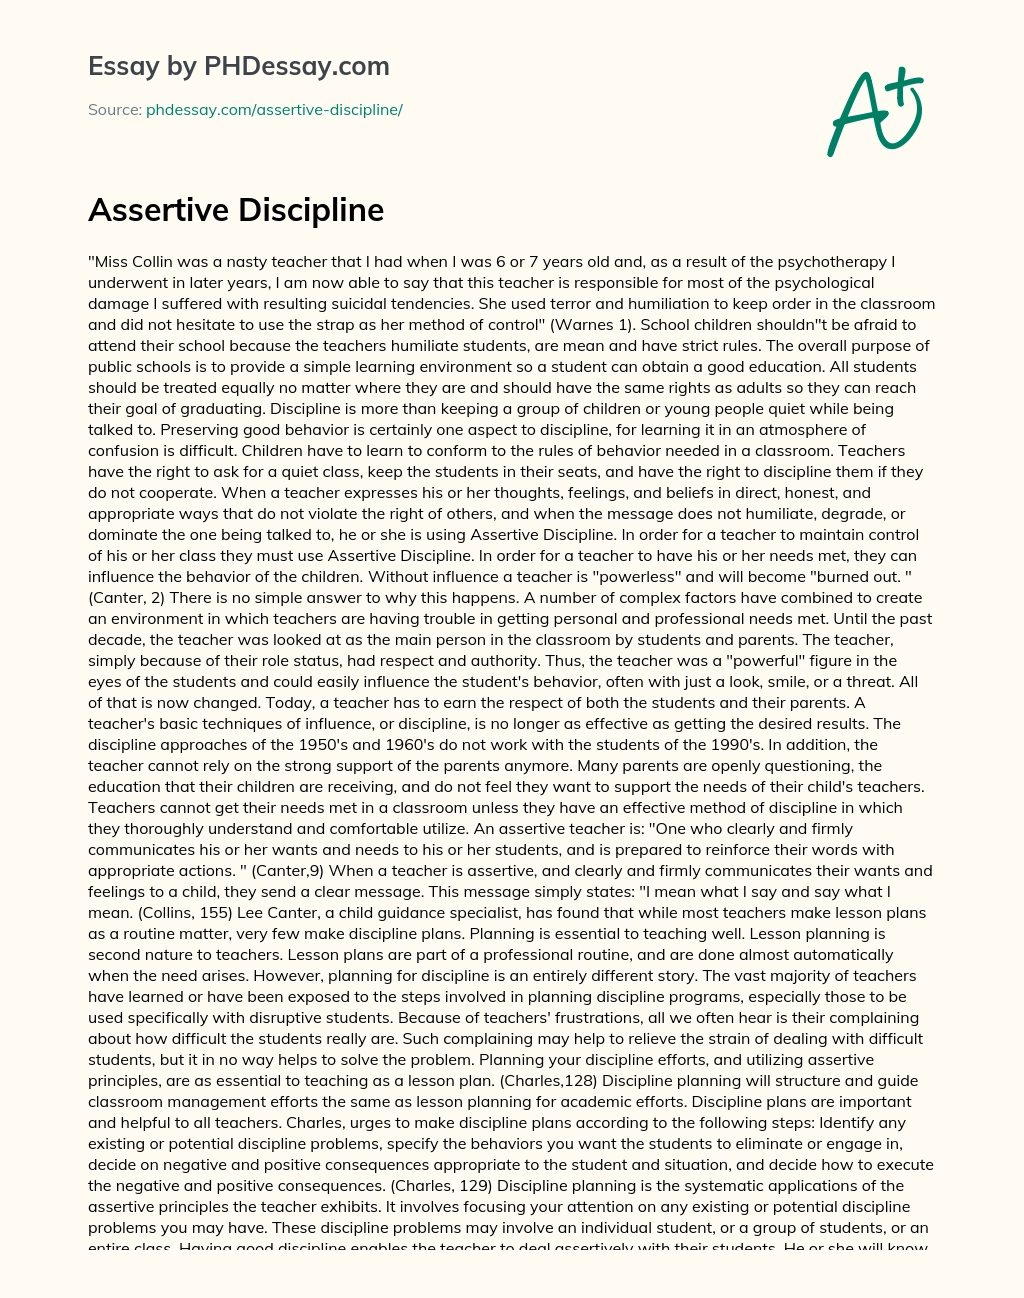 Assertive Discipline essay